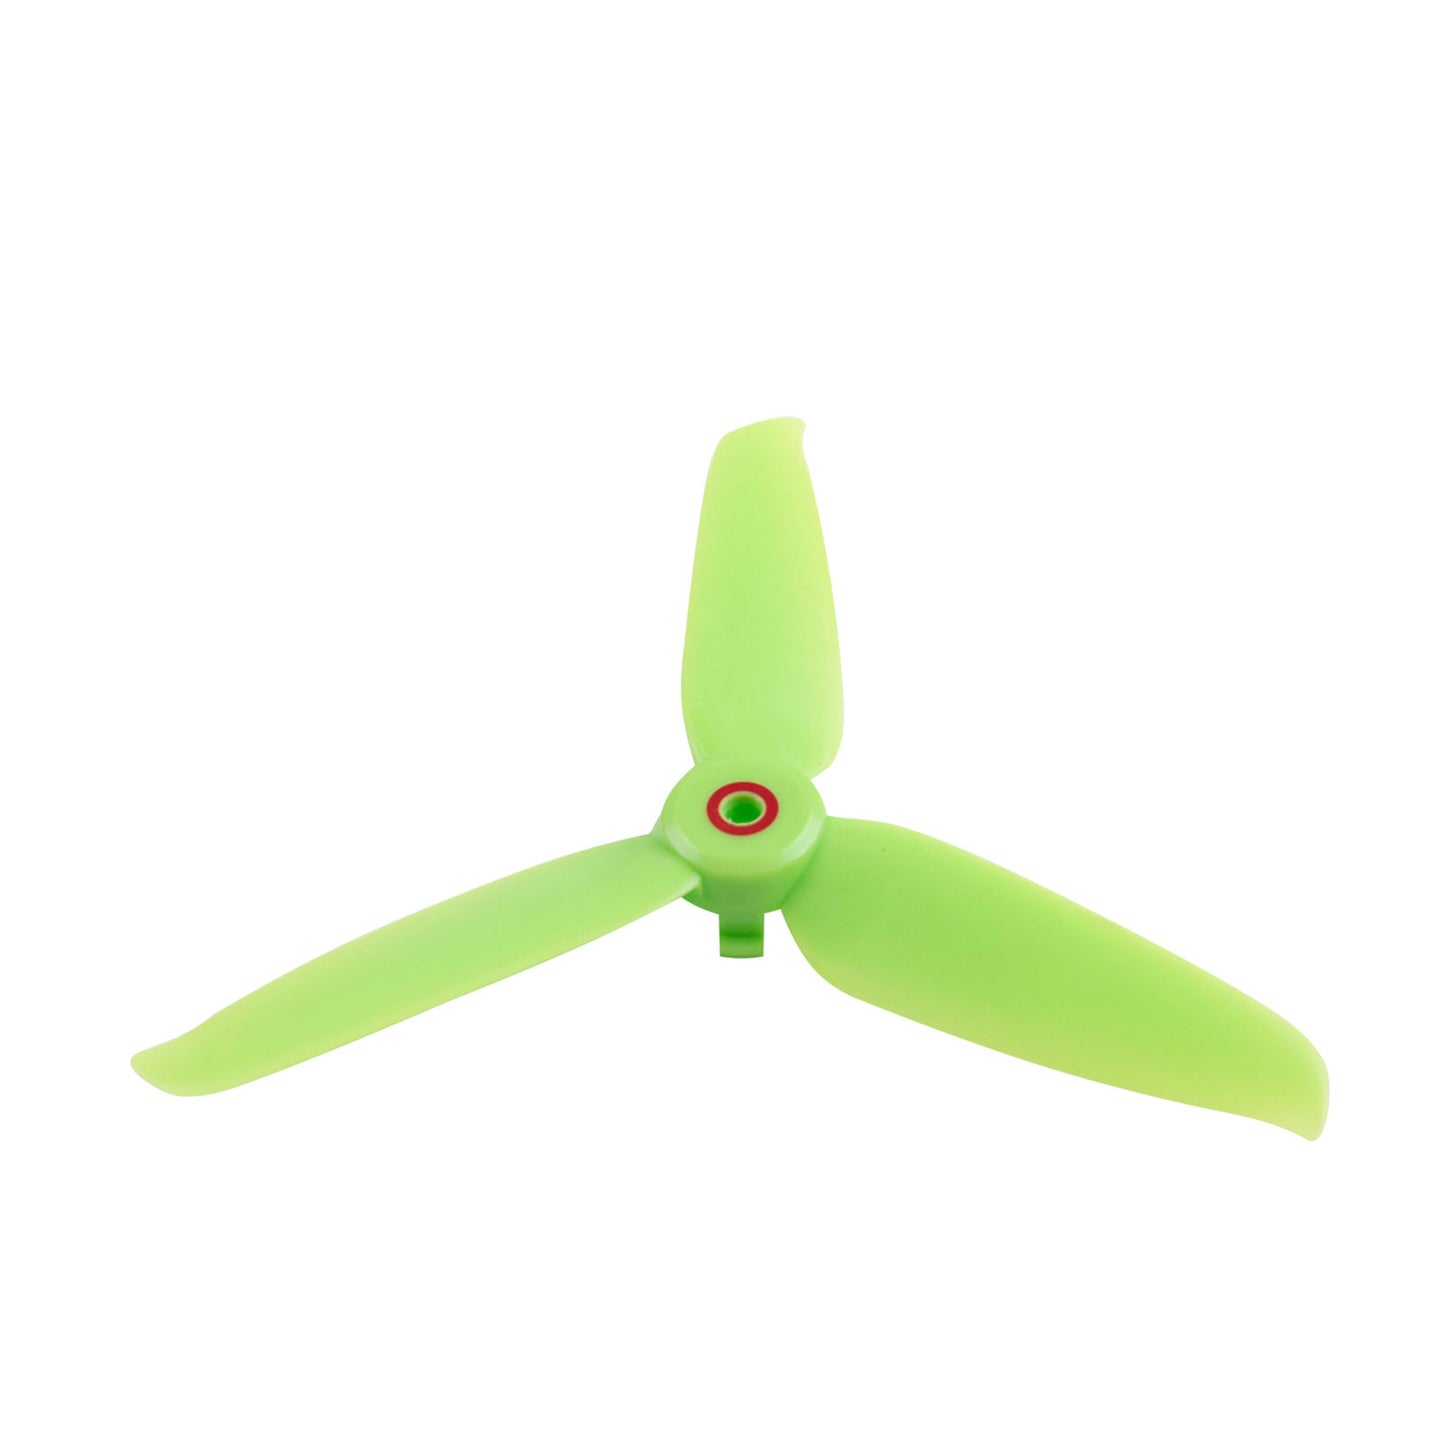 DJI FPV Propellers 5328 Low Noise Quick-Release Props for DJI FPV Drone (Green)